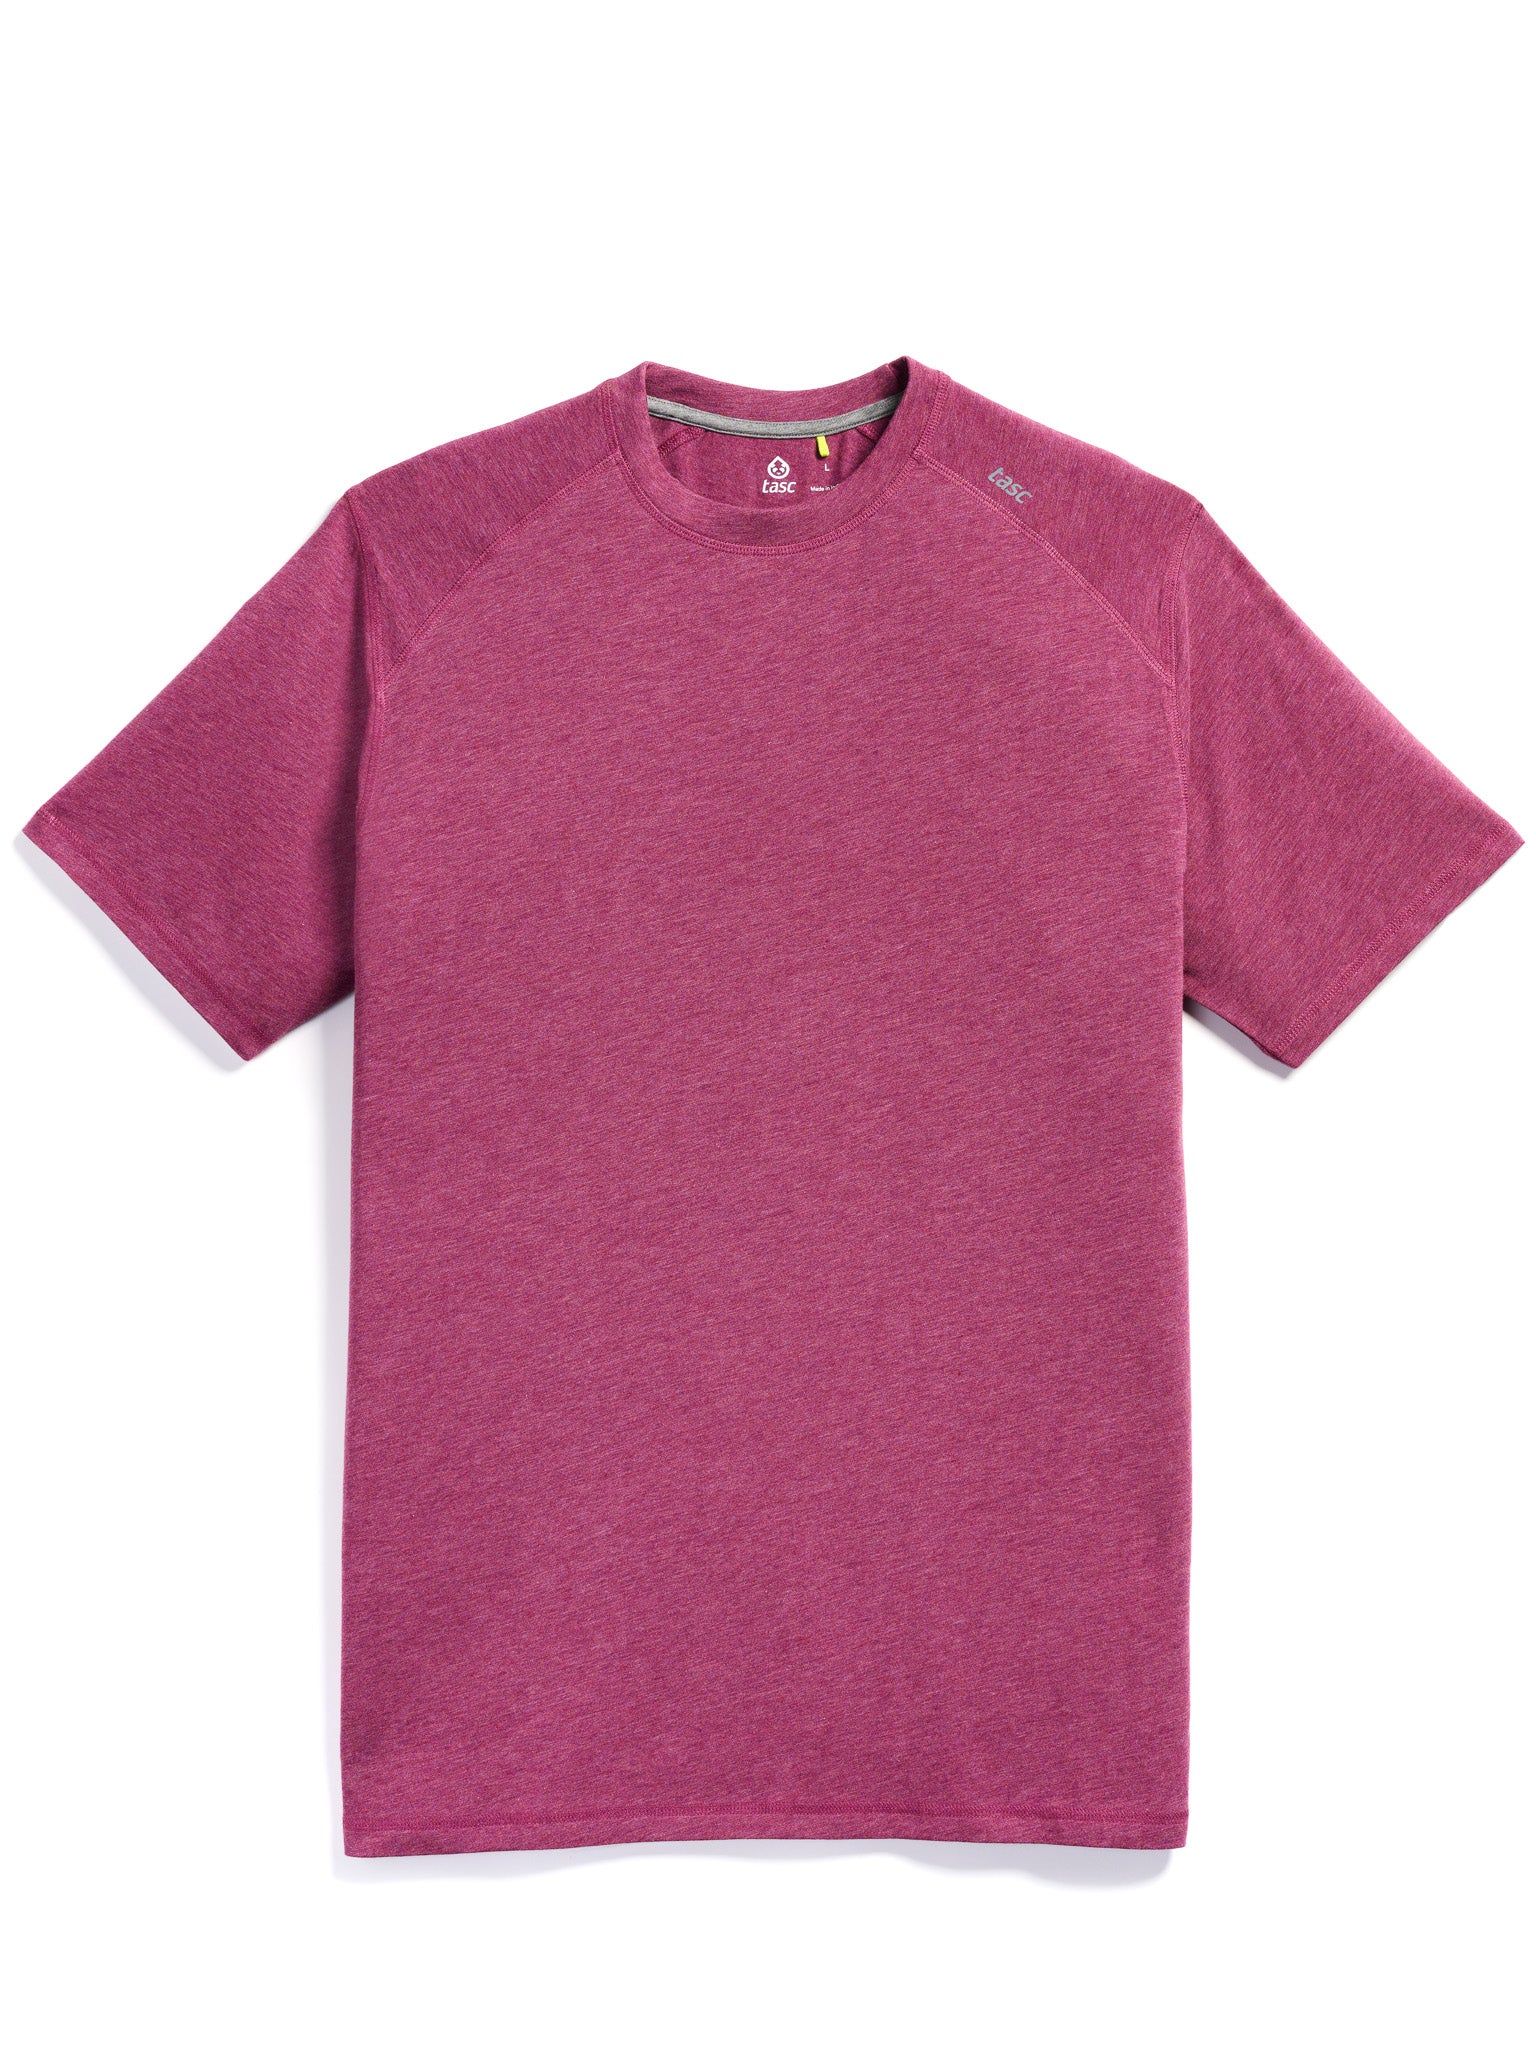 Carrollton Fitness T-Shirt - Seasonal (GrapeHeather)